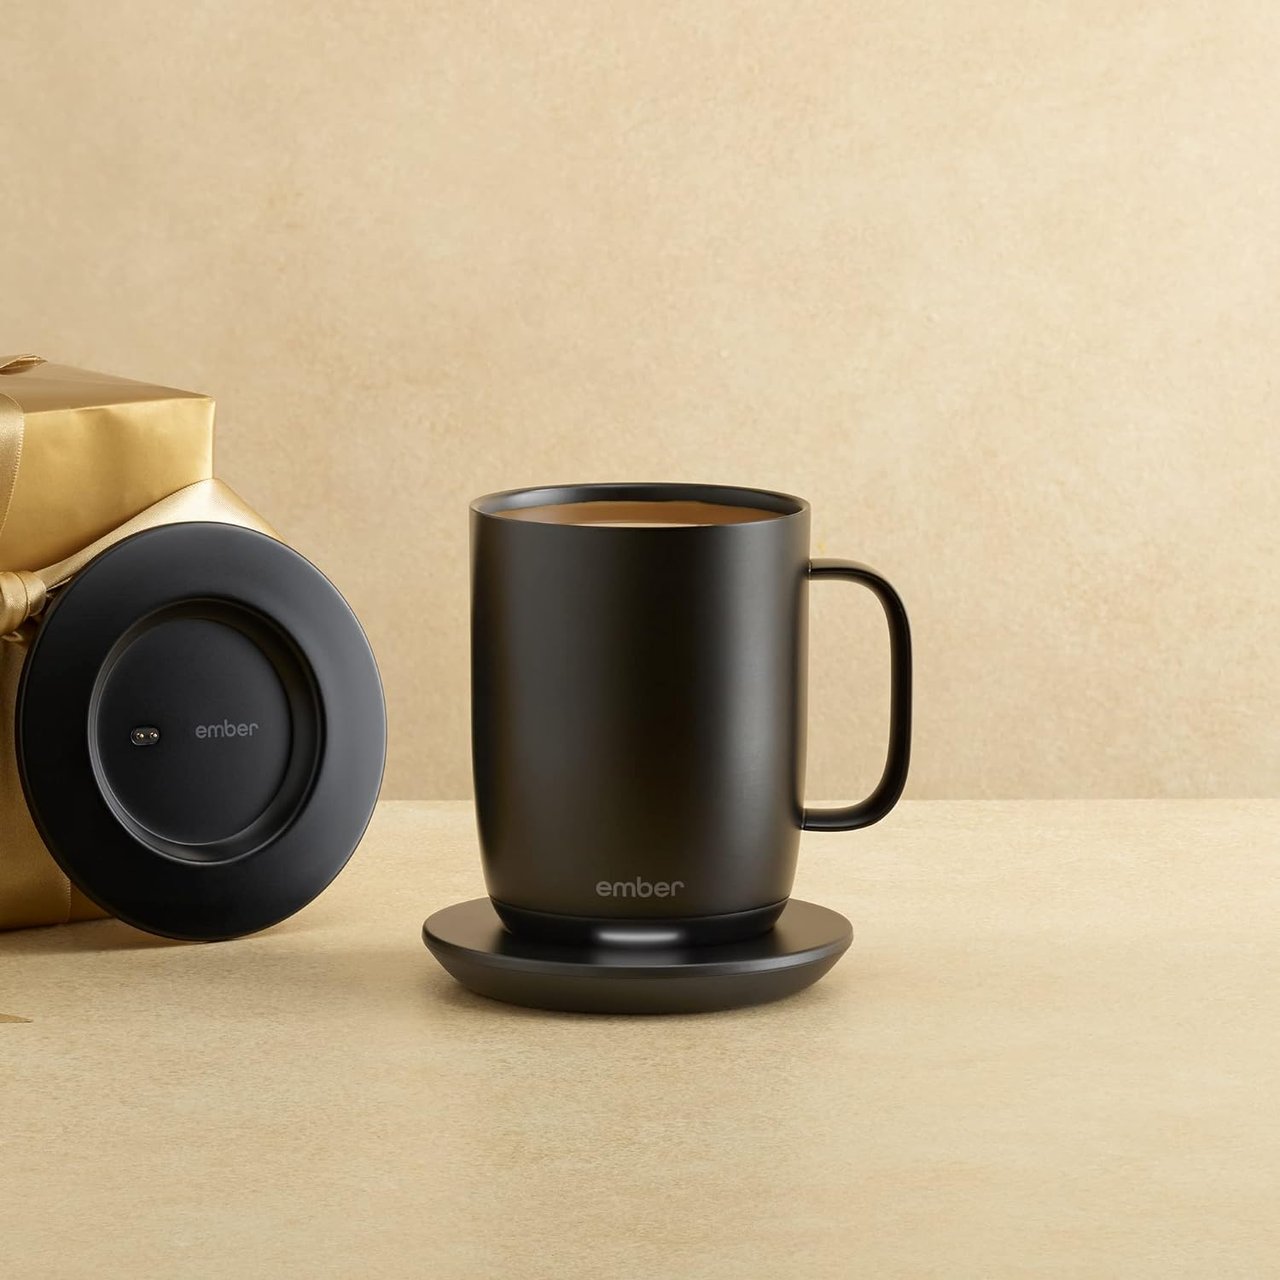 2 Ember 2 Smart Mug, 414 ml, Black, 80 min. Battery Life – App-Controlled Heated Mug – Upgraded Design